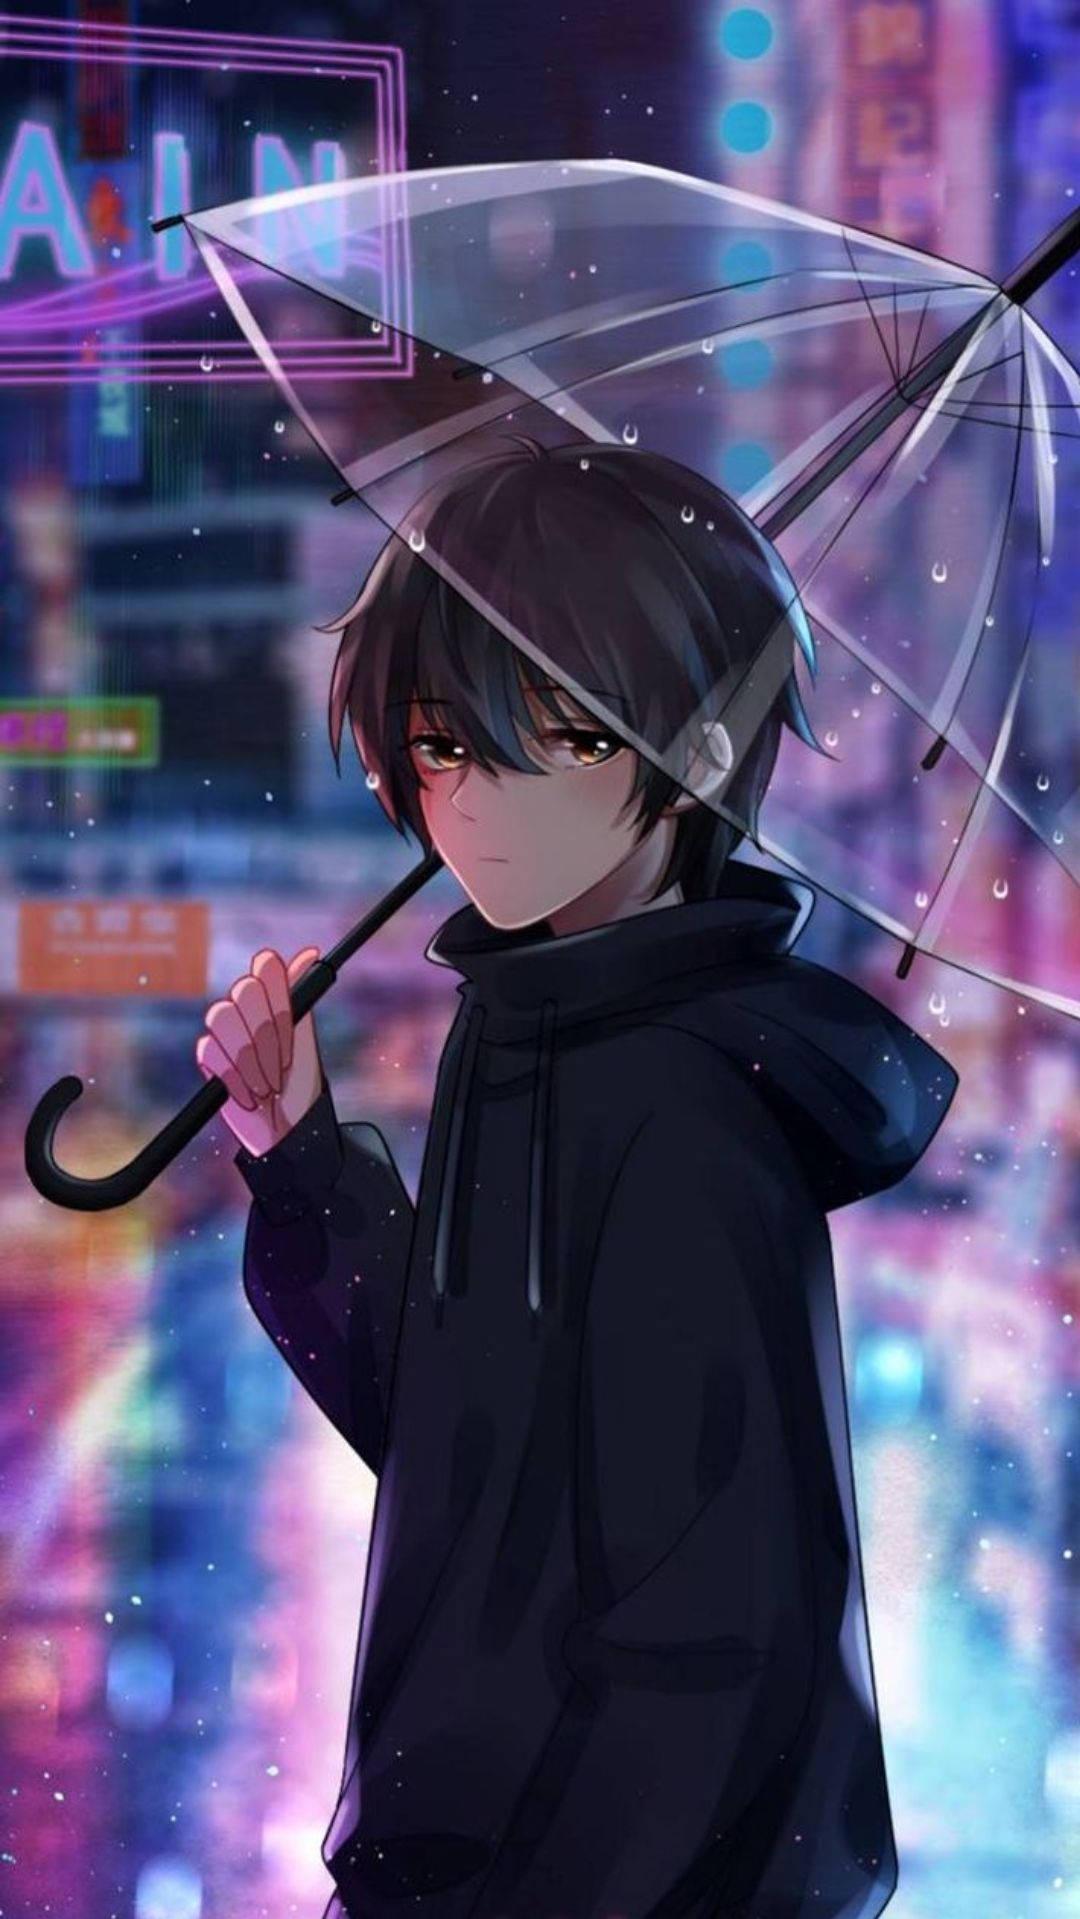 Download Clear Umbrella Of Anime Boy Sad Aesthetic Wallpaper